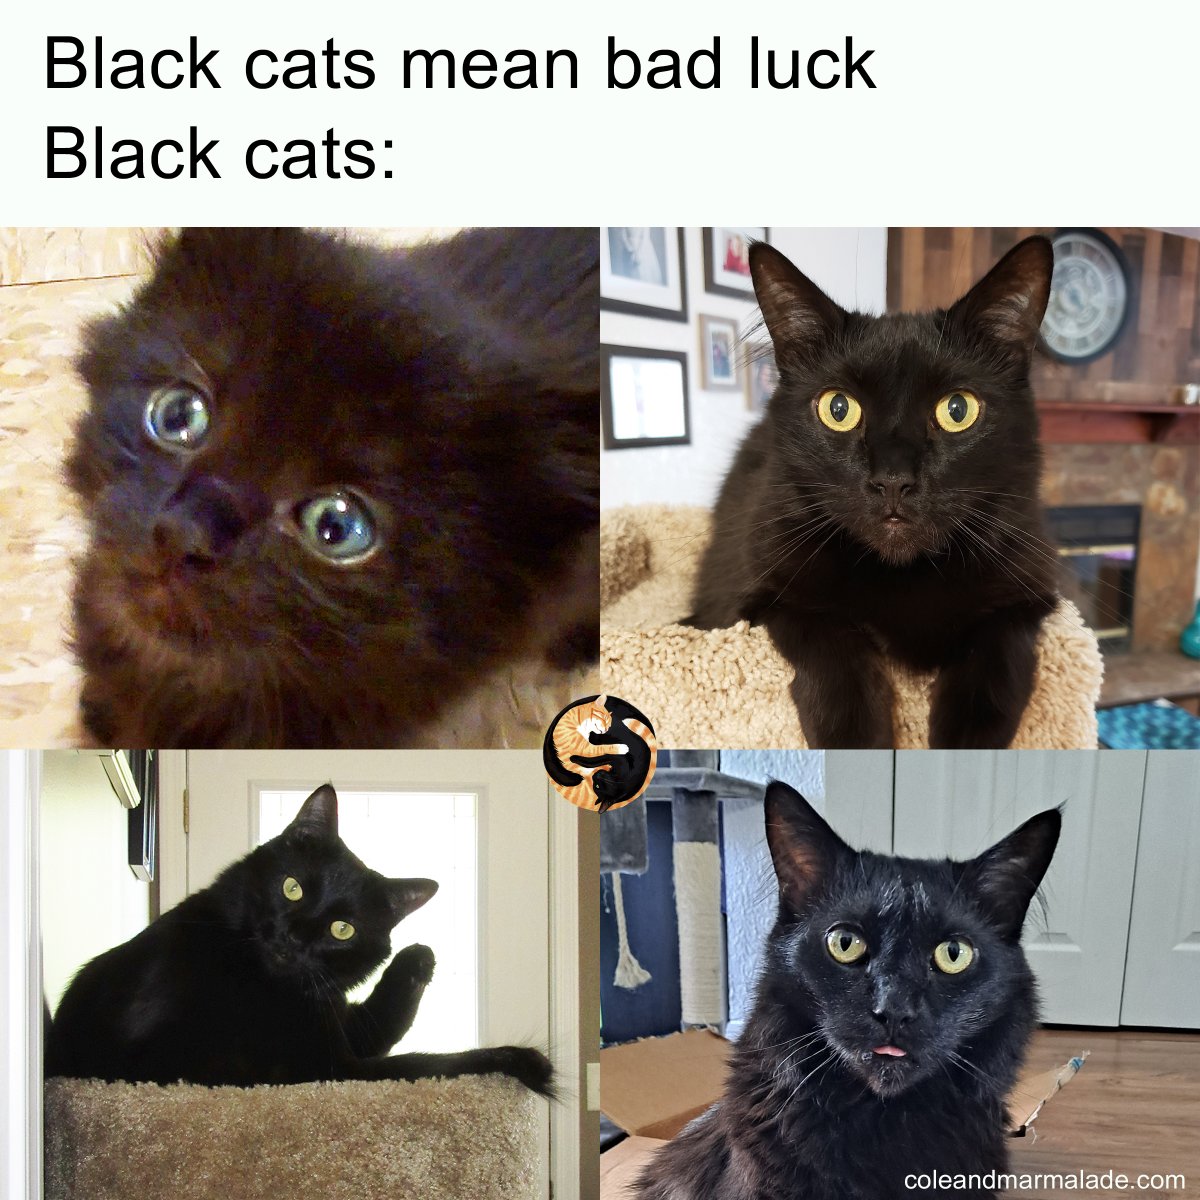 Black cats are PAWSOME! 🖤
#BlackCatsRock #ColeAndMarmalade